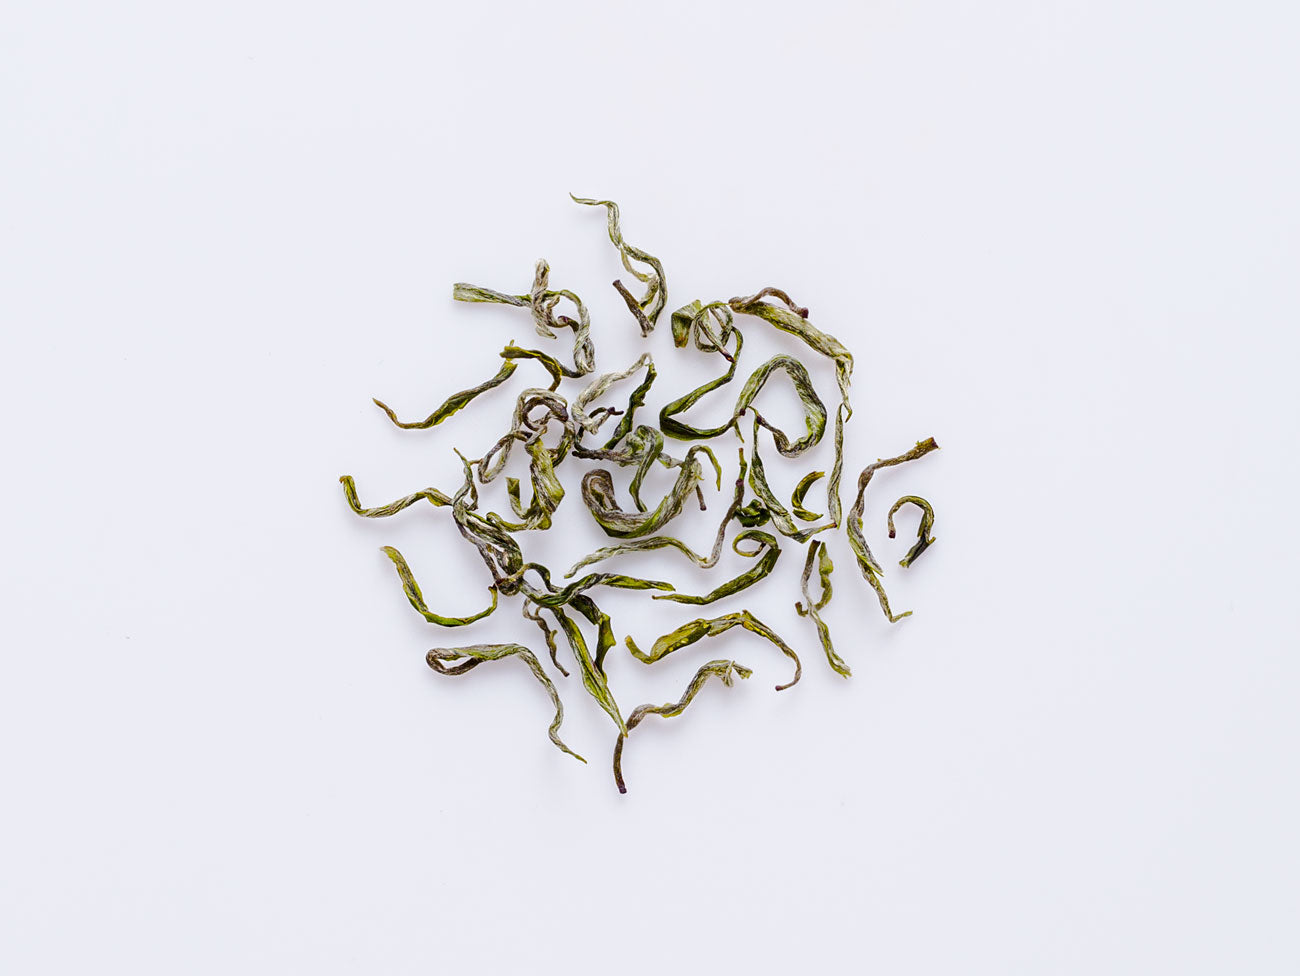 Baojing Huangjing Cha. A green tea from Hunan Province. Dry leaf photograph.